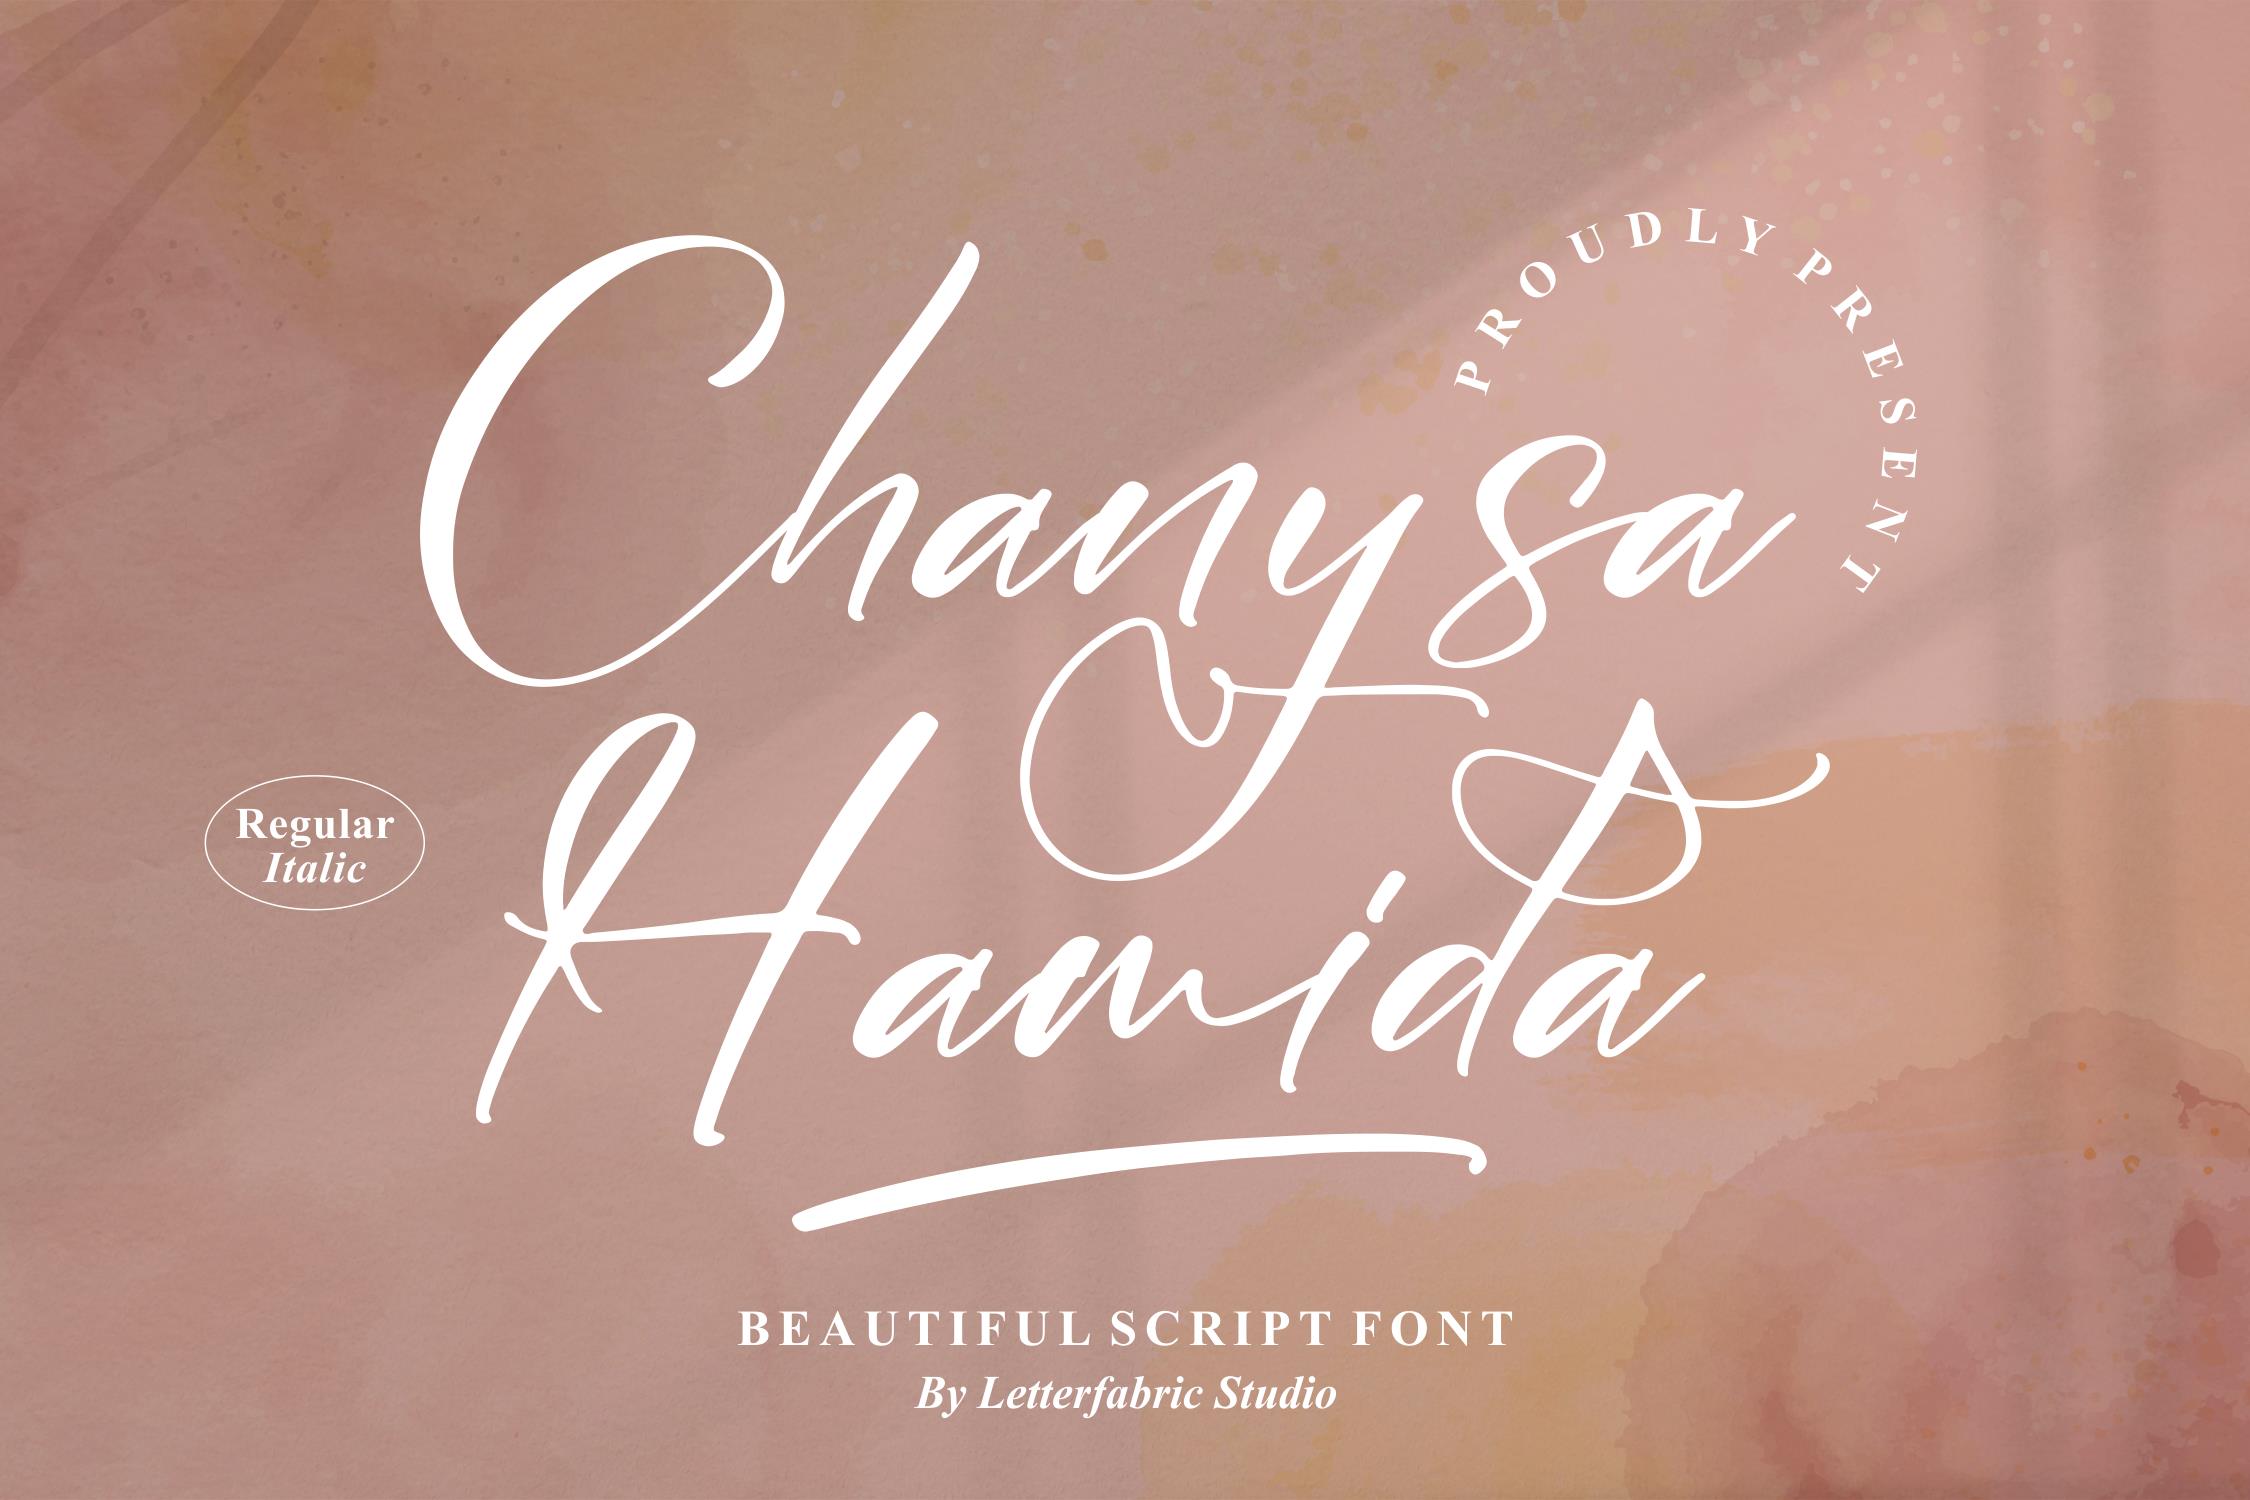 Chanysa Hamida